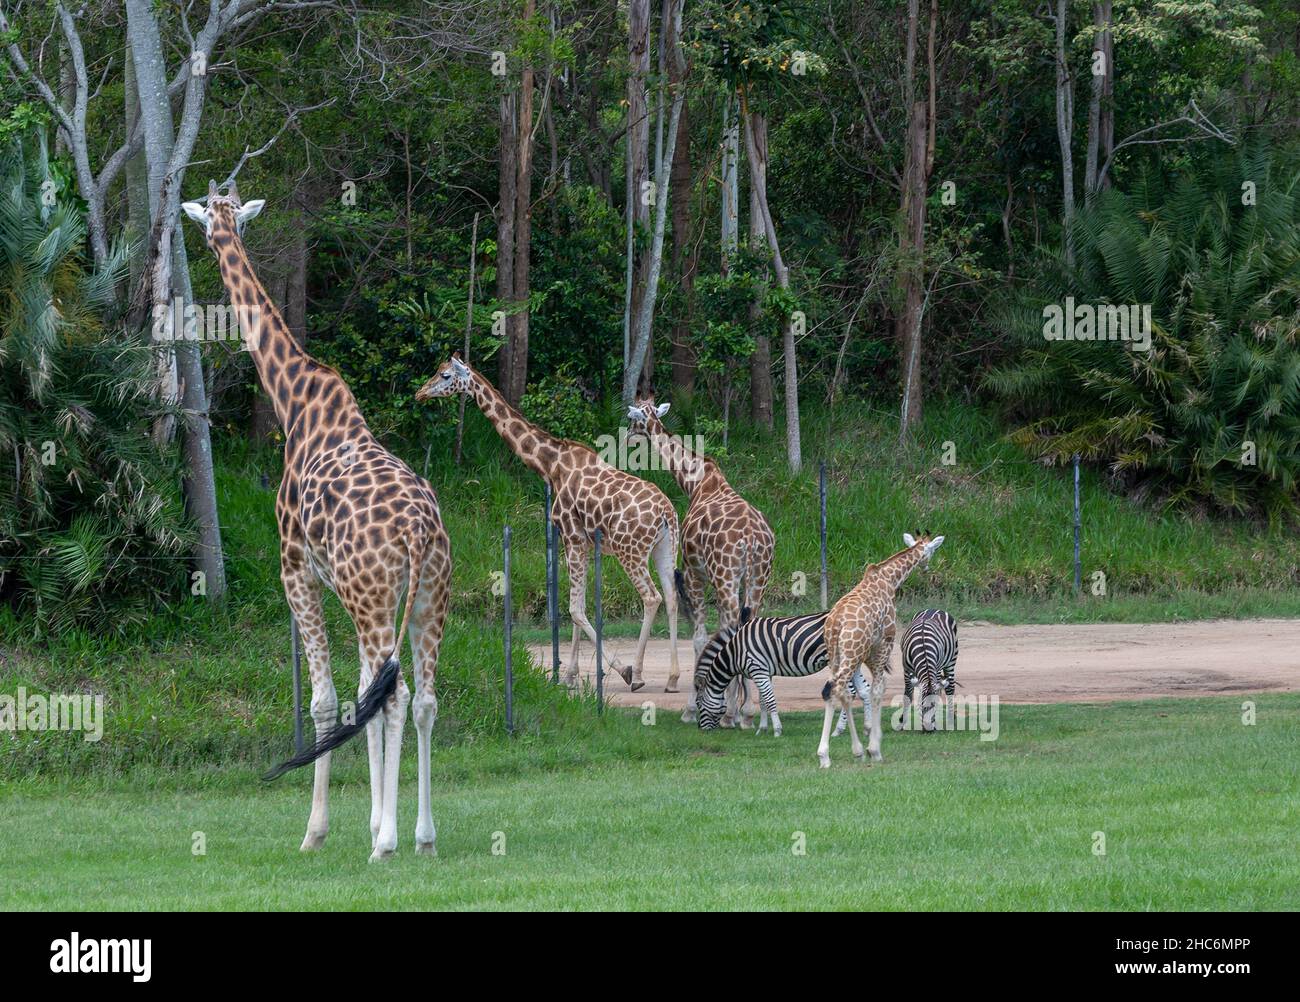 Giraffes and zebras in an open zoological garden in Queensland, Australia Stock Photo